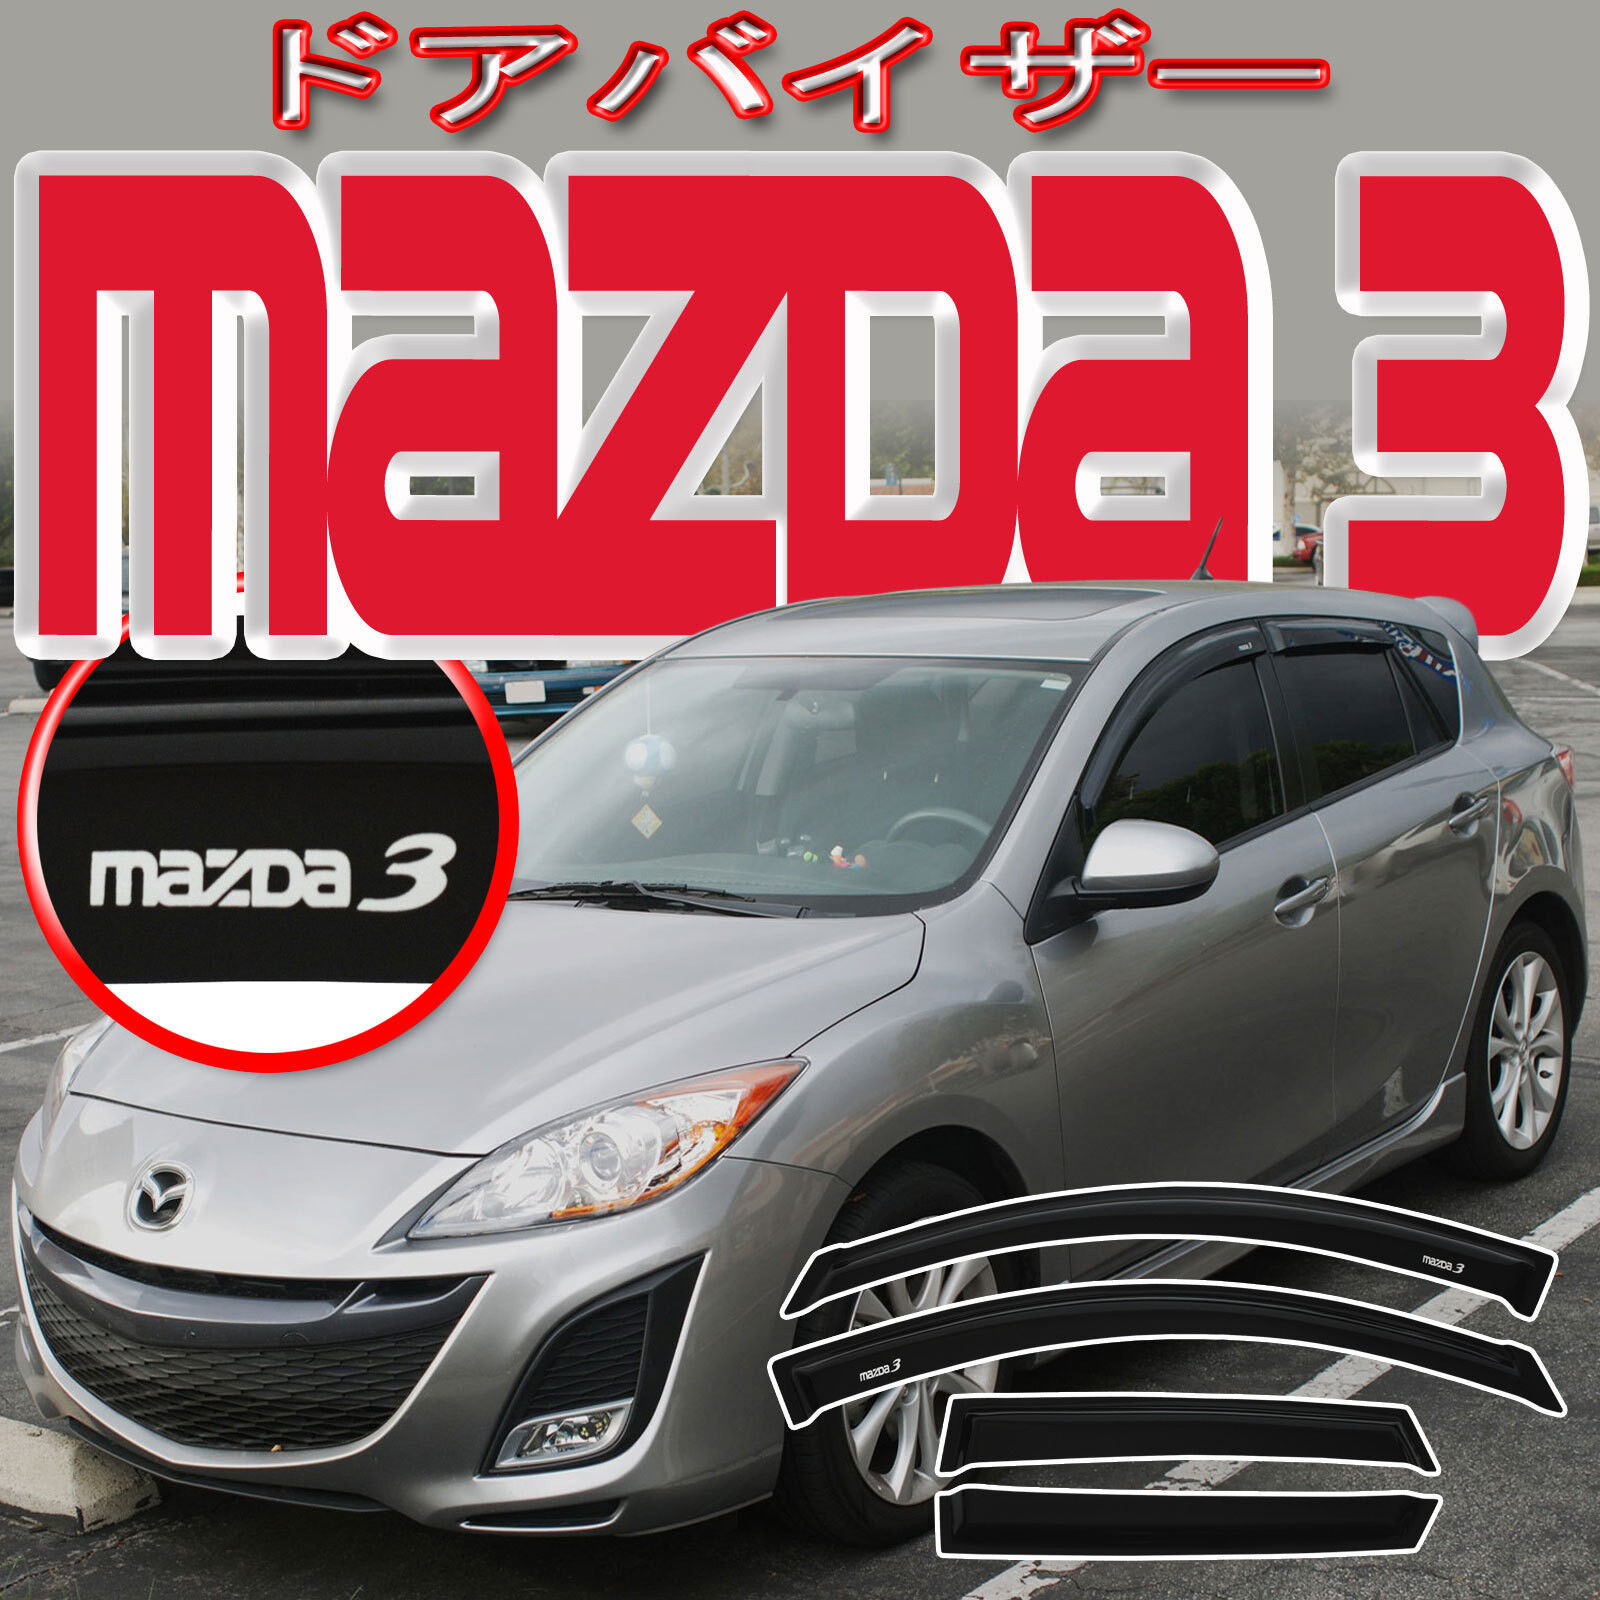 10 11 12 13 Mazda 3 Hatch Window Visors Door Vent Shade Deflectors Guard w/ Logo